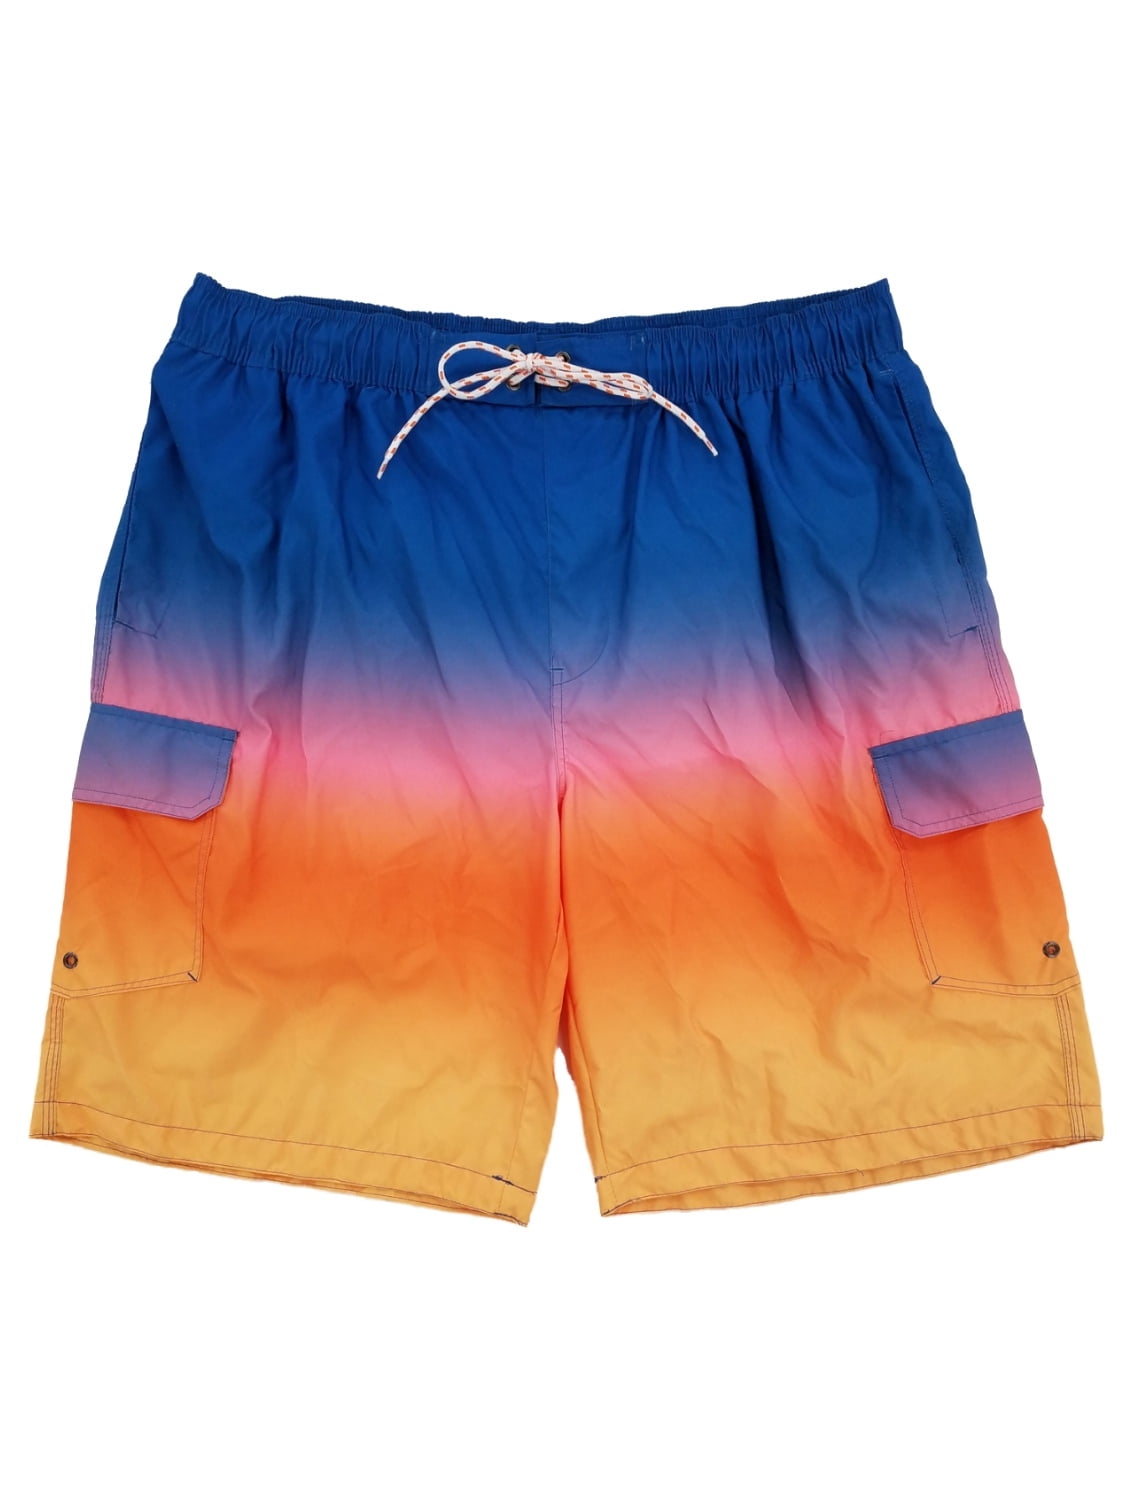 Adults Fishing Shorts Drawstring Lightweight Board Shorts California Beach Sunset